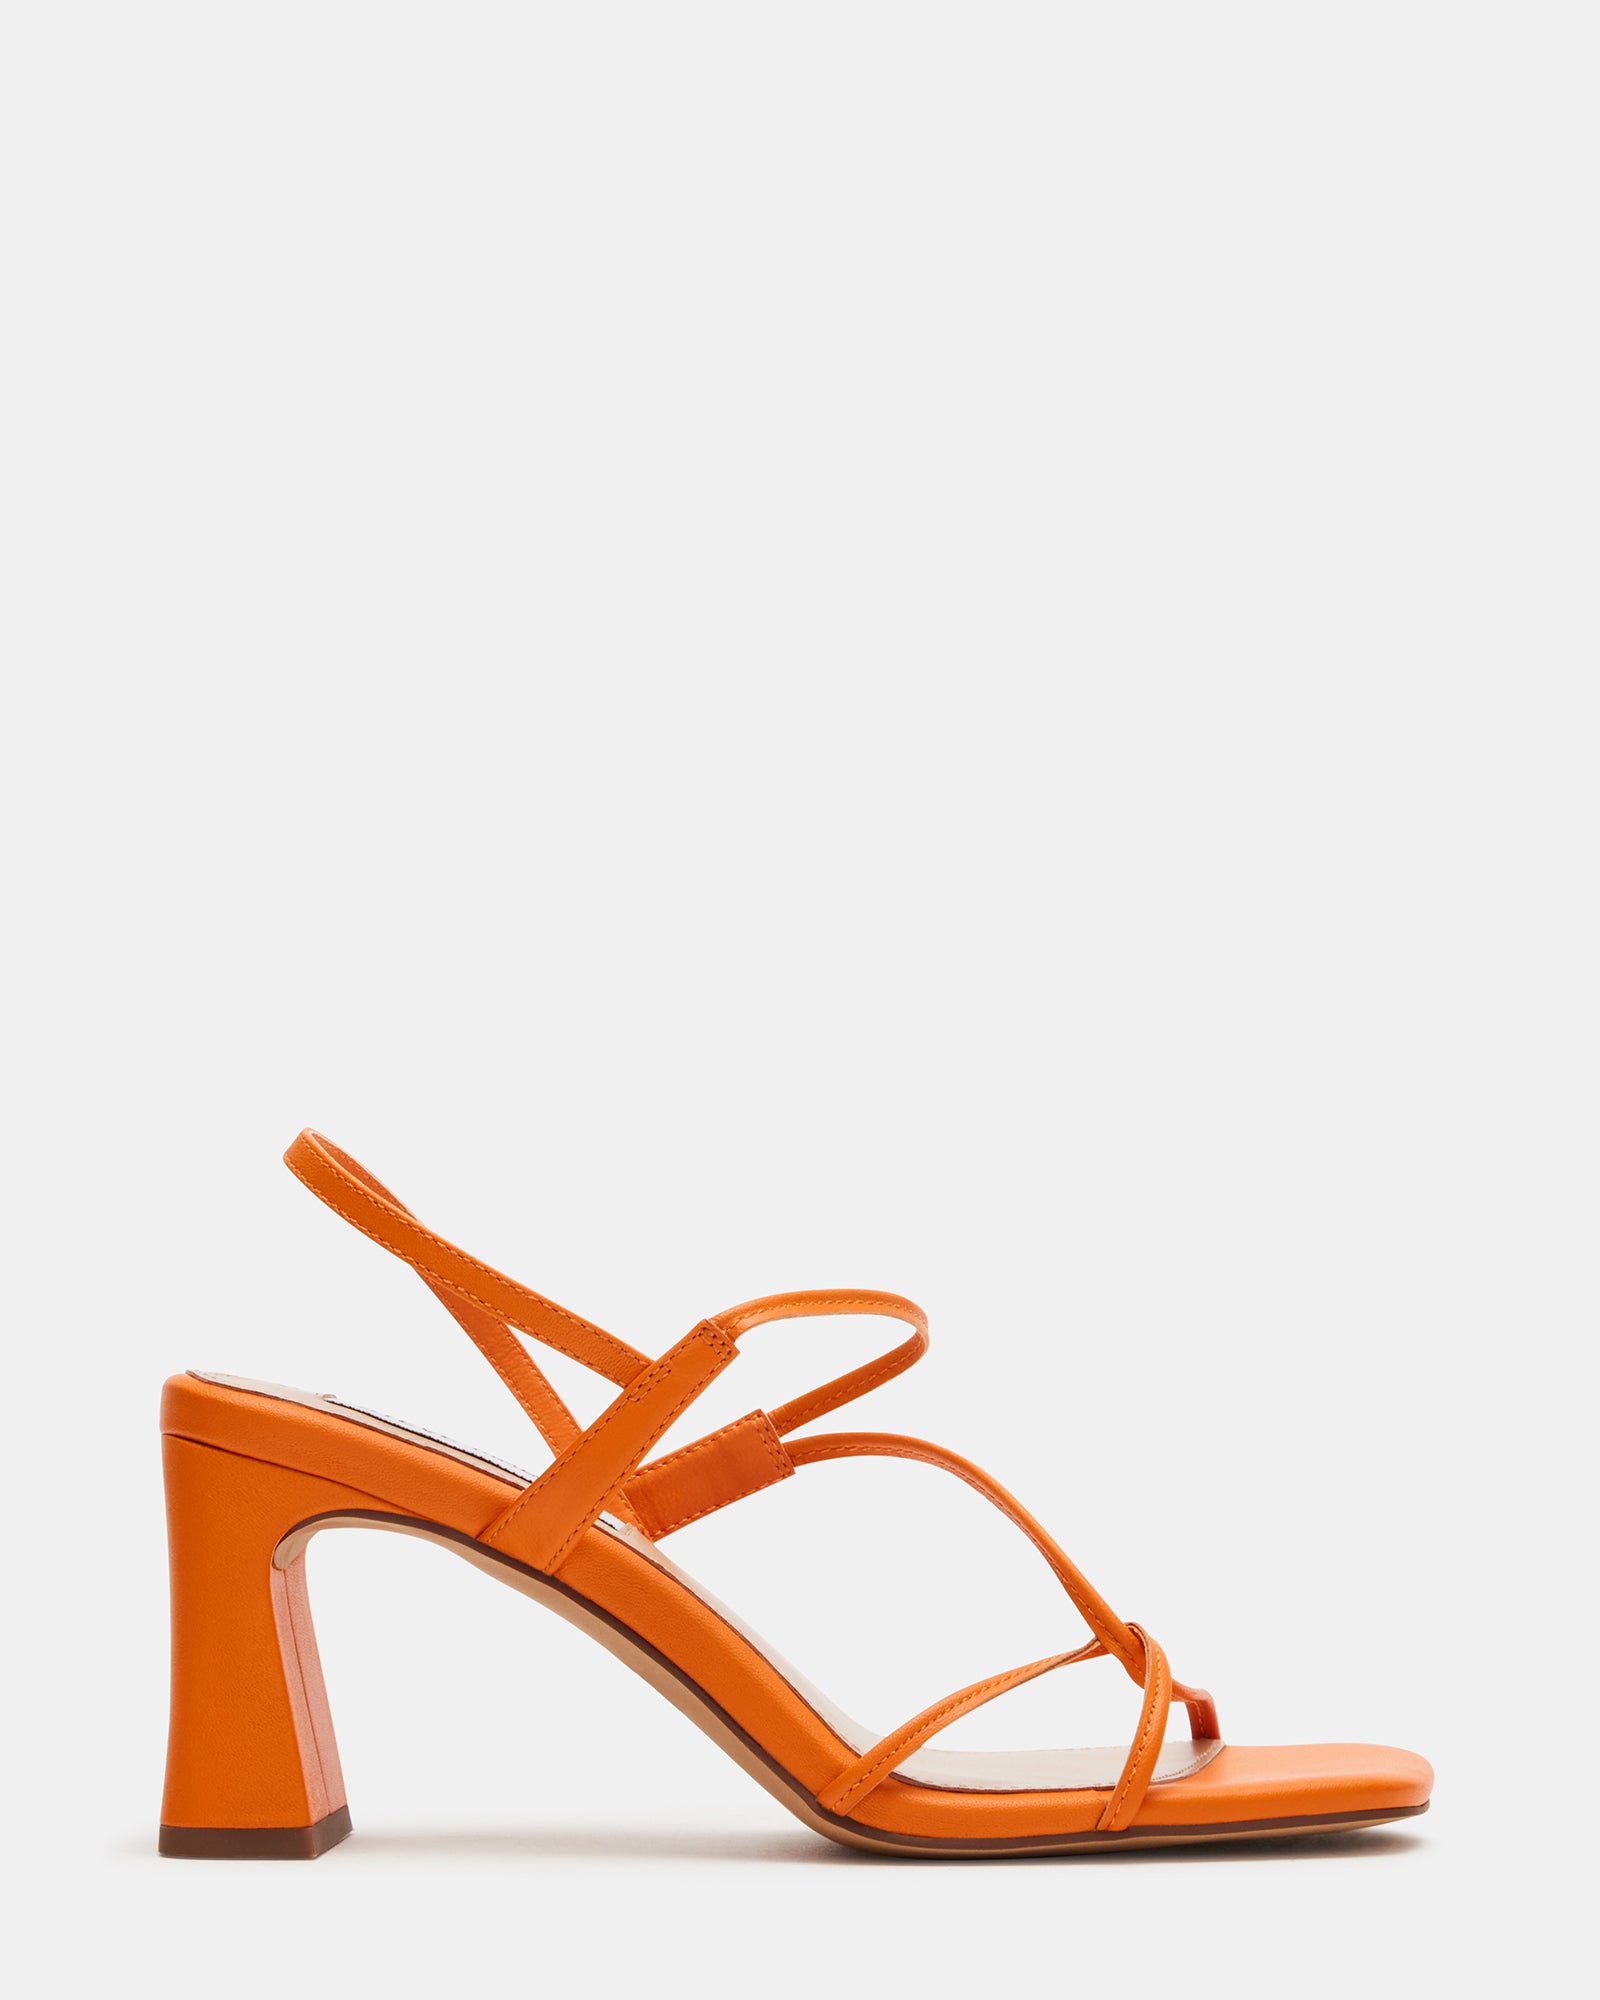 Surkova Red/orange Patent Leather Gradient Color Patchwork Shoes Women 12cm  Thin High Heels Shallow Cut Pumps Slip-on Wedding - Pumps - AliExpress